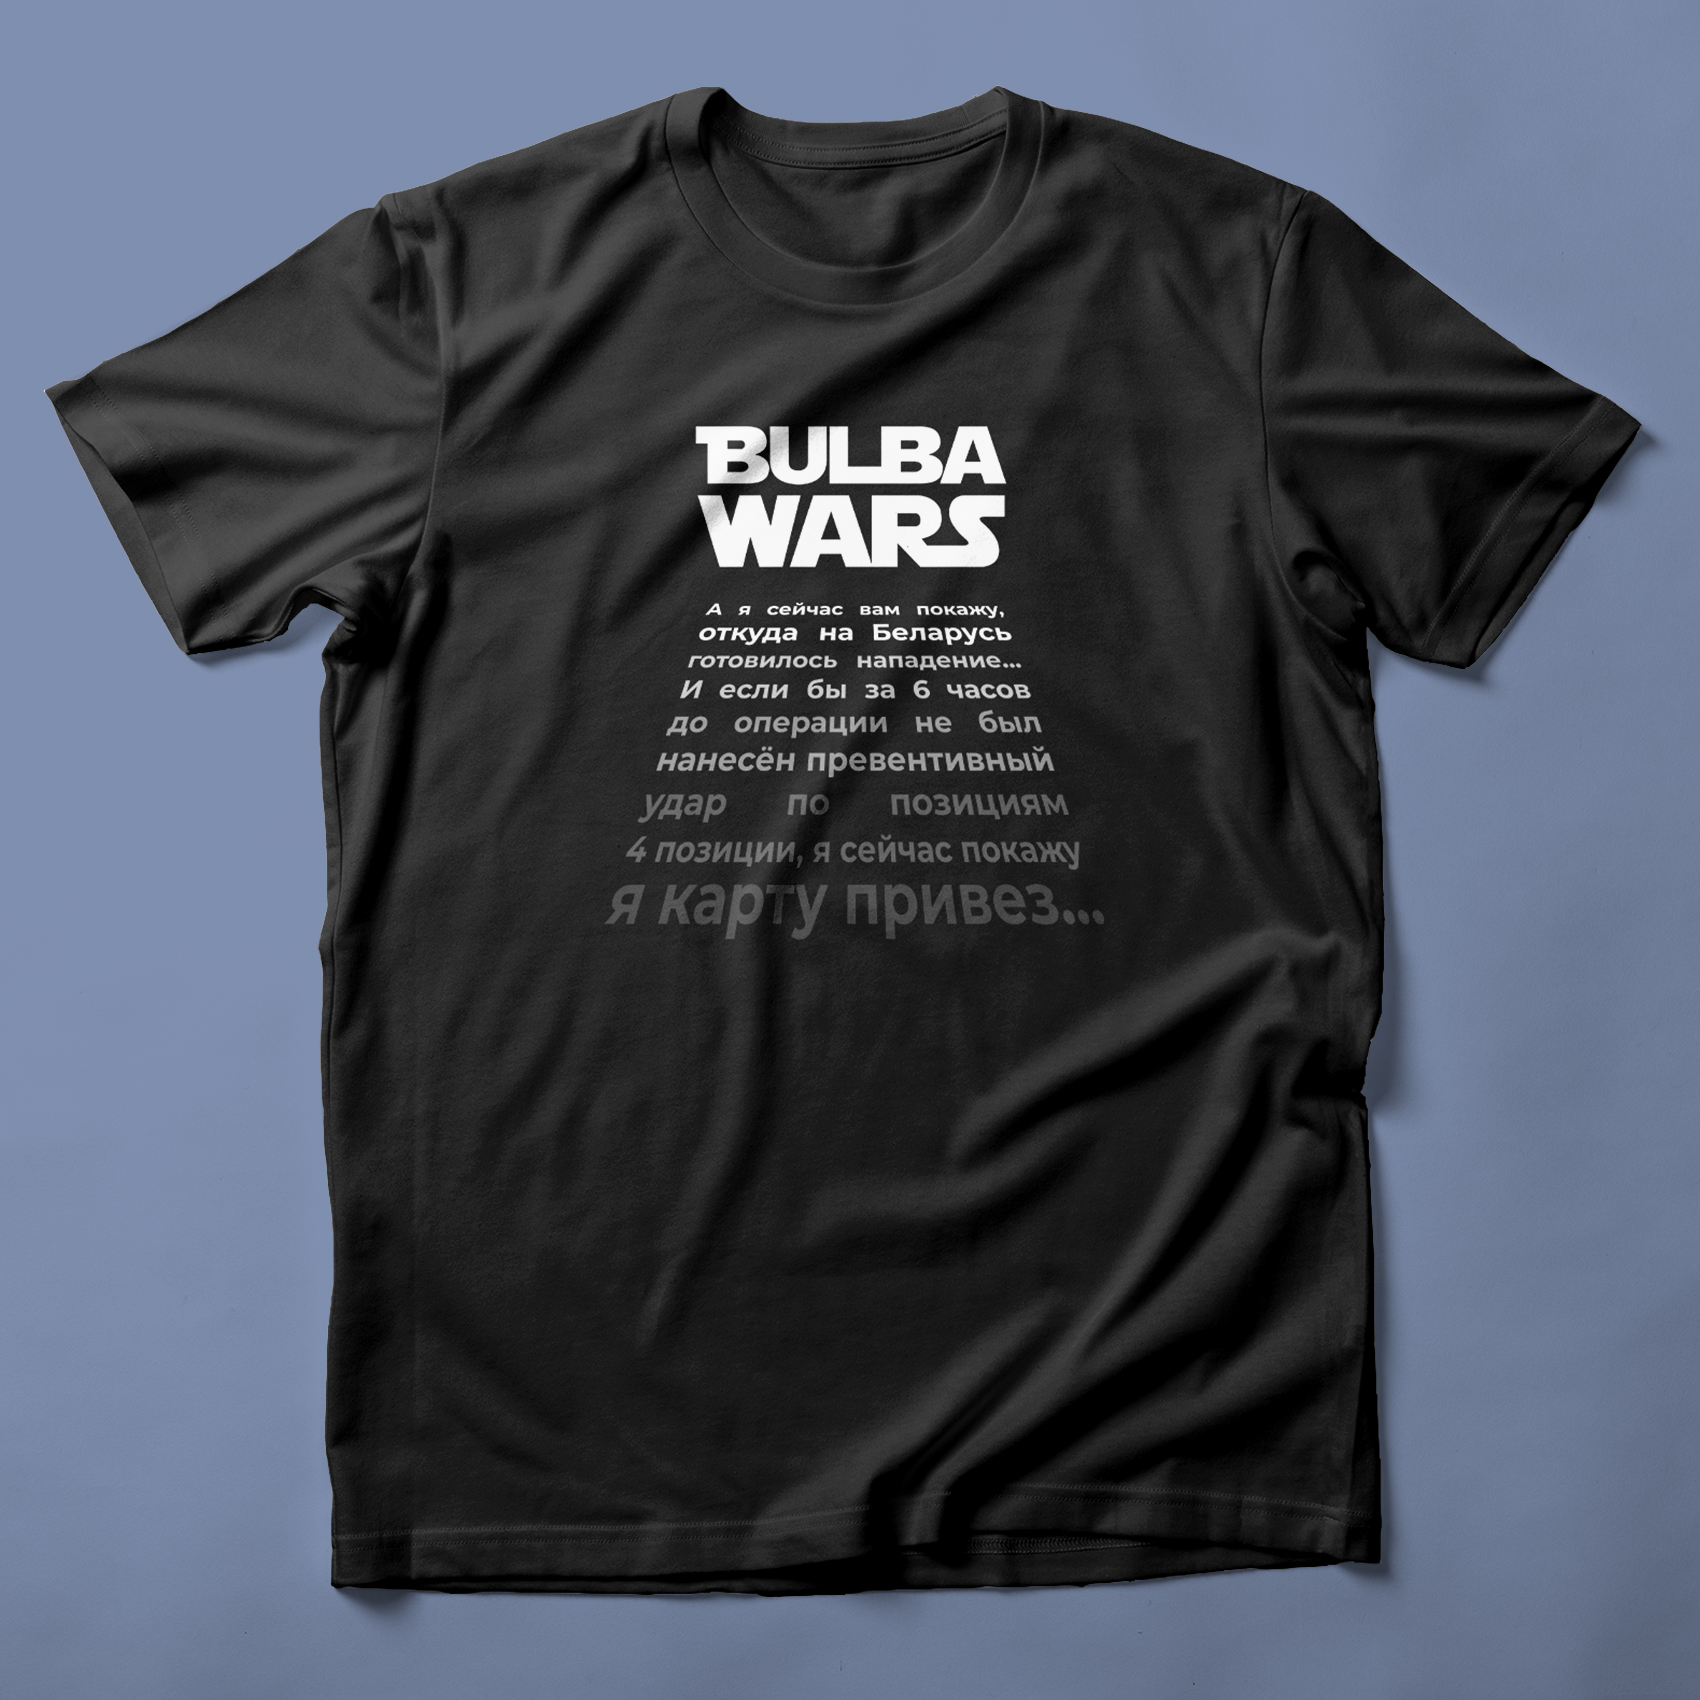 Bulba wars